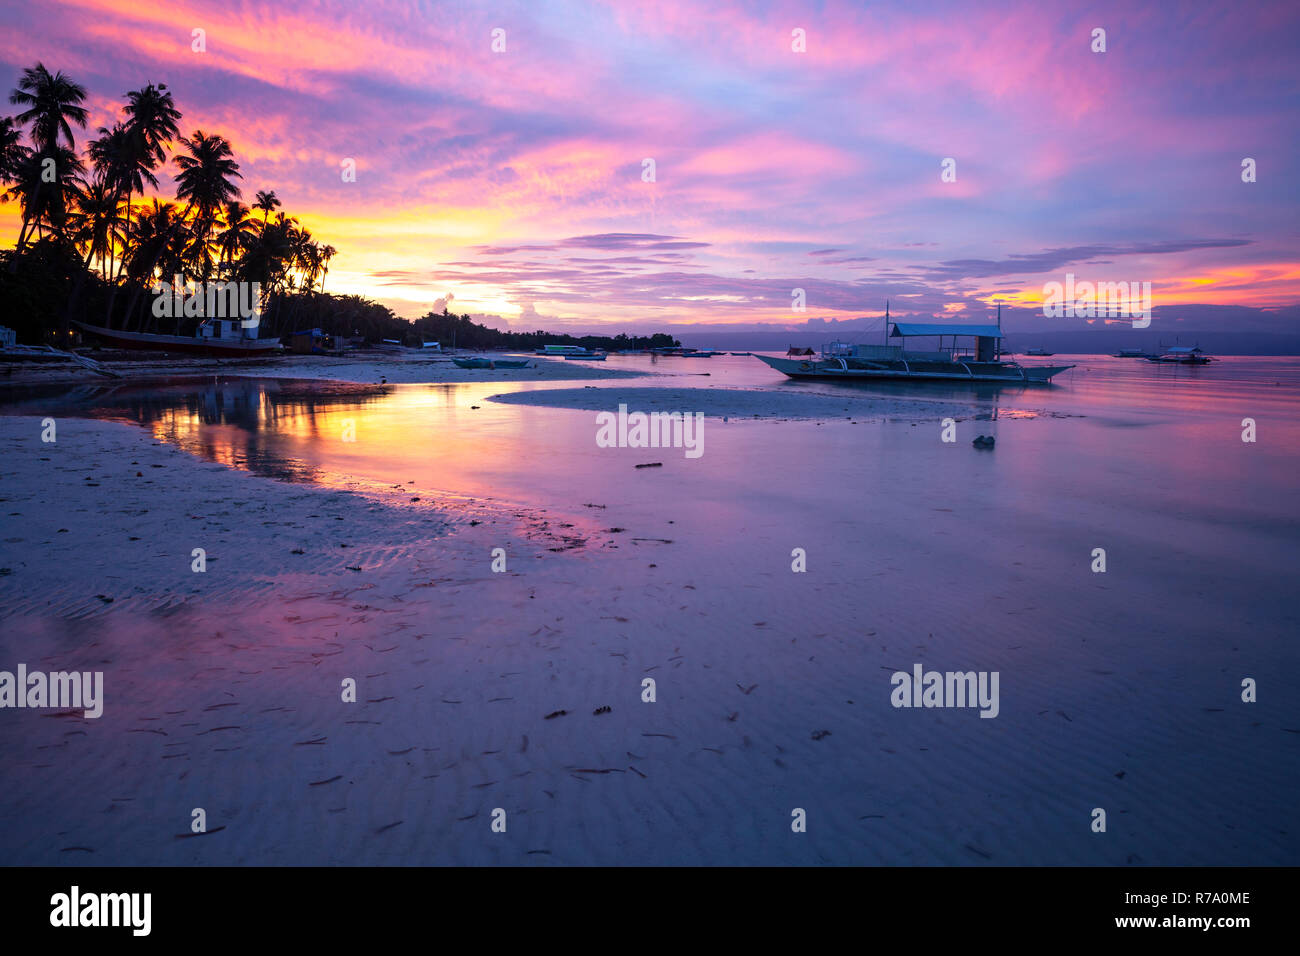 Stunning view of the sunset on the Philippine beach. Doljo beach, Panglao, Bohol, Philippines. Stock Photo